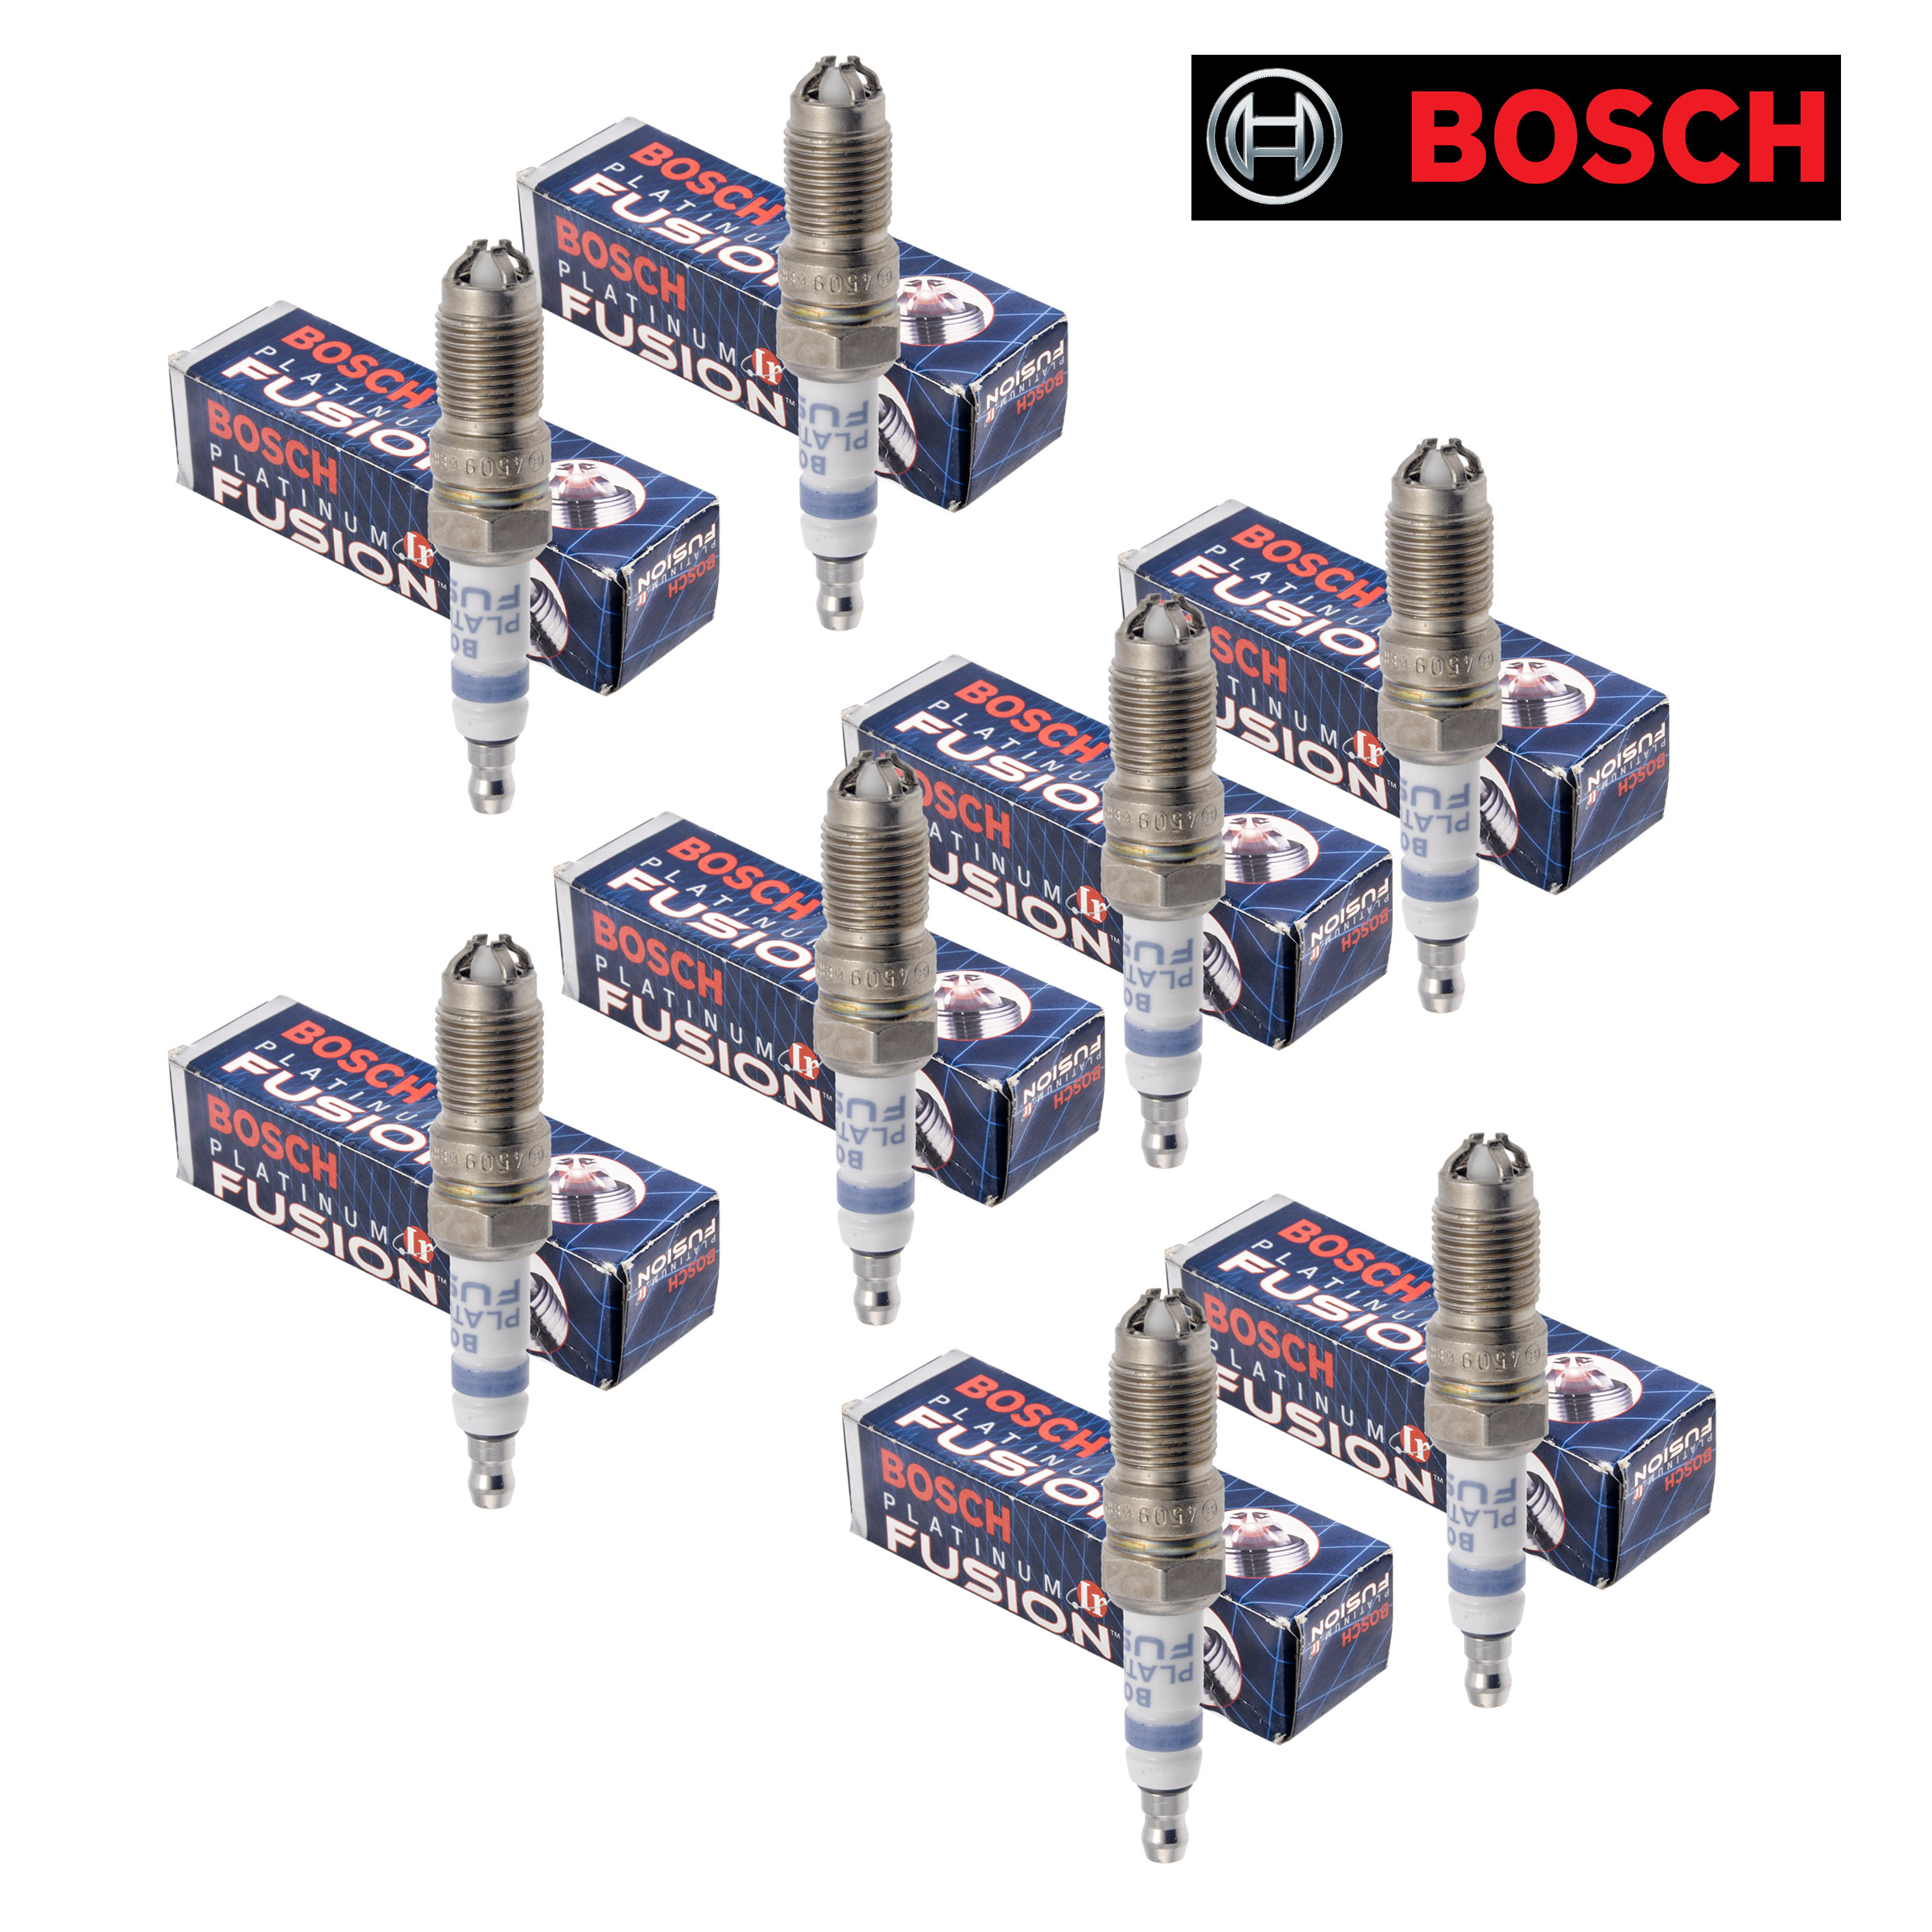 New Set of 4 Bosch Platinum Ir Iridium Fusion Spark Plugs 4509 Made in Germany